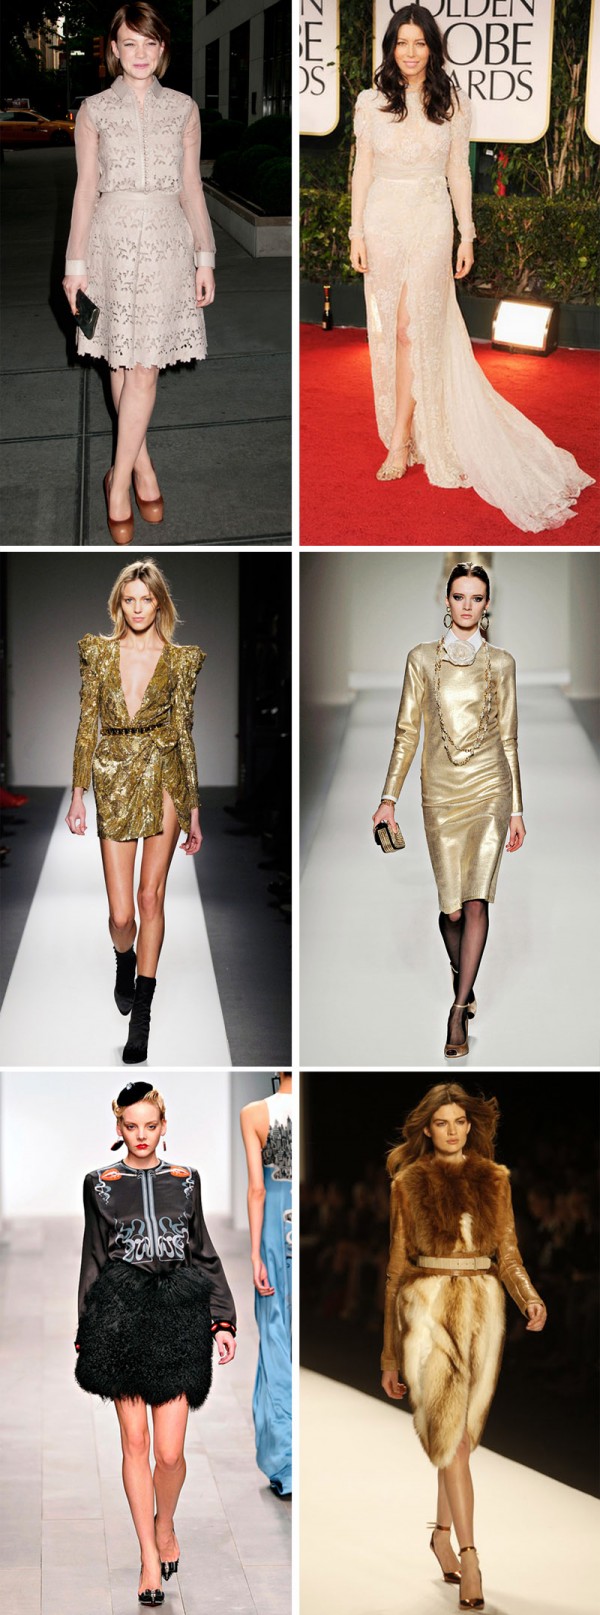 image of Lace Dresses, Gold Dresses, and Fur Dresses Spring 2012